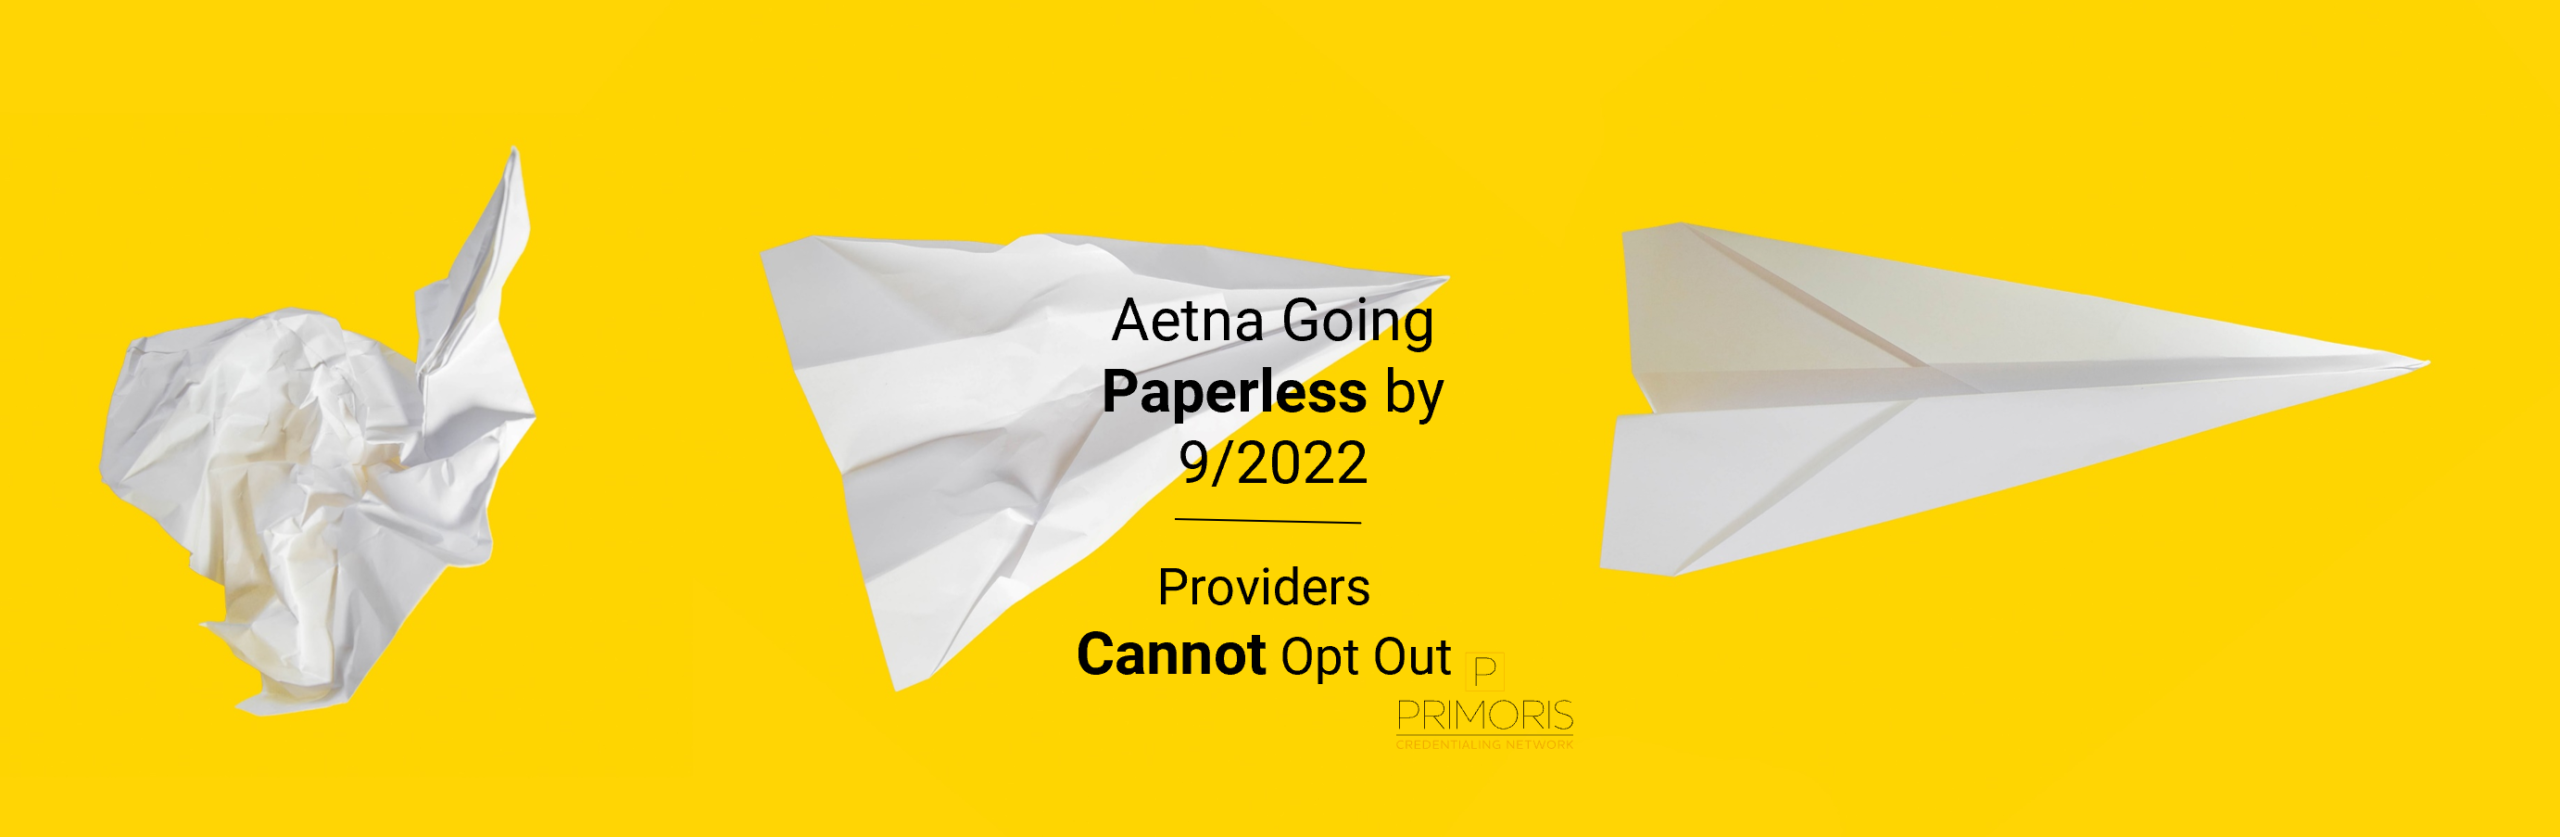 PrimorisCredentialingNetwork.com 2022 Aetna Going Paperless